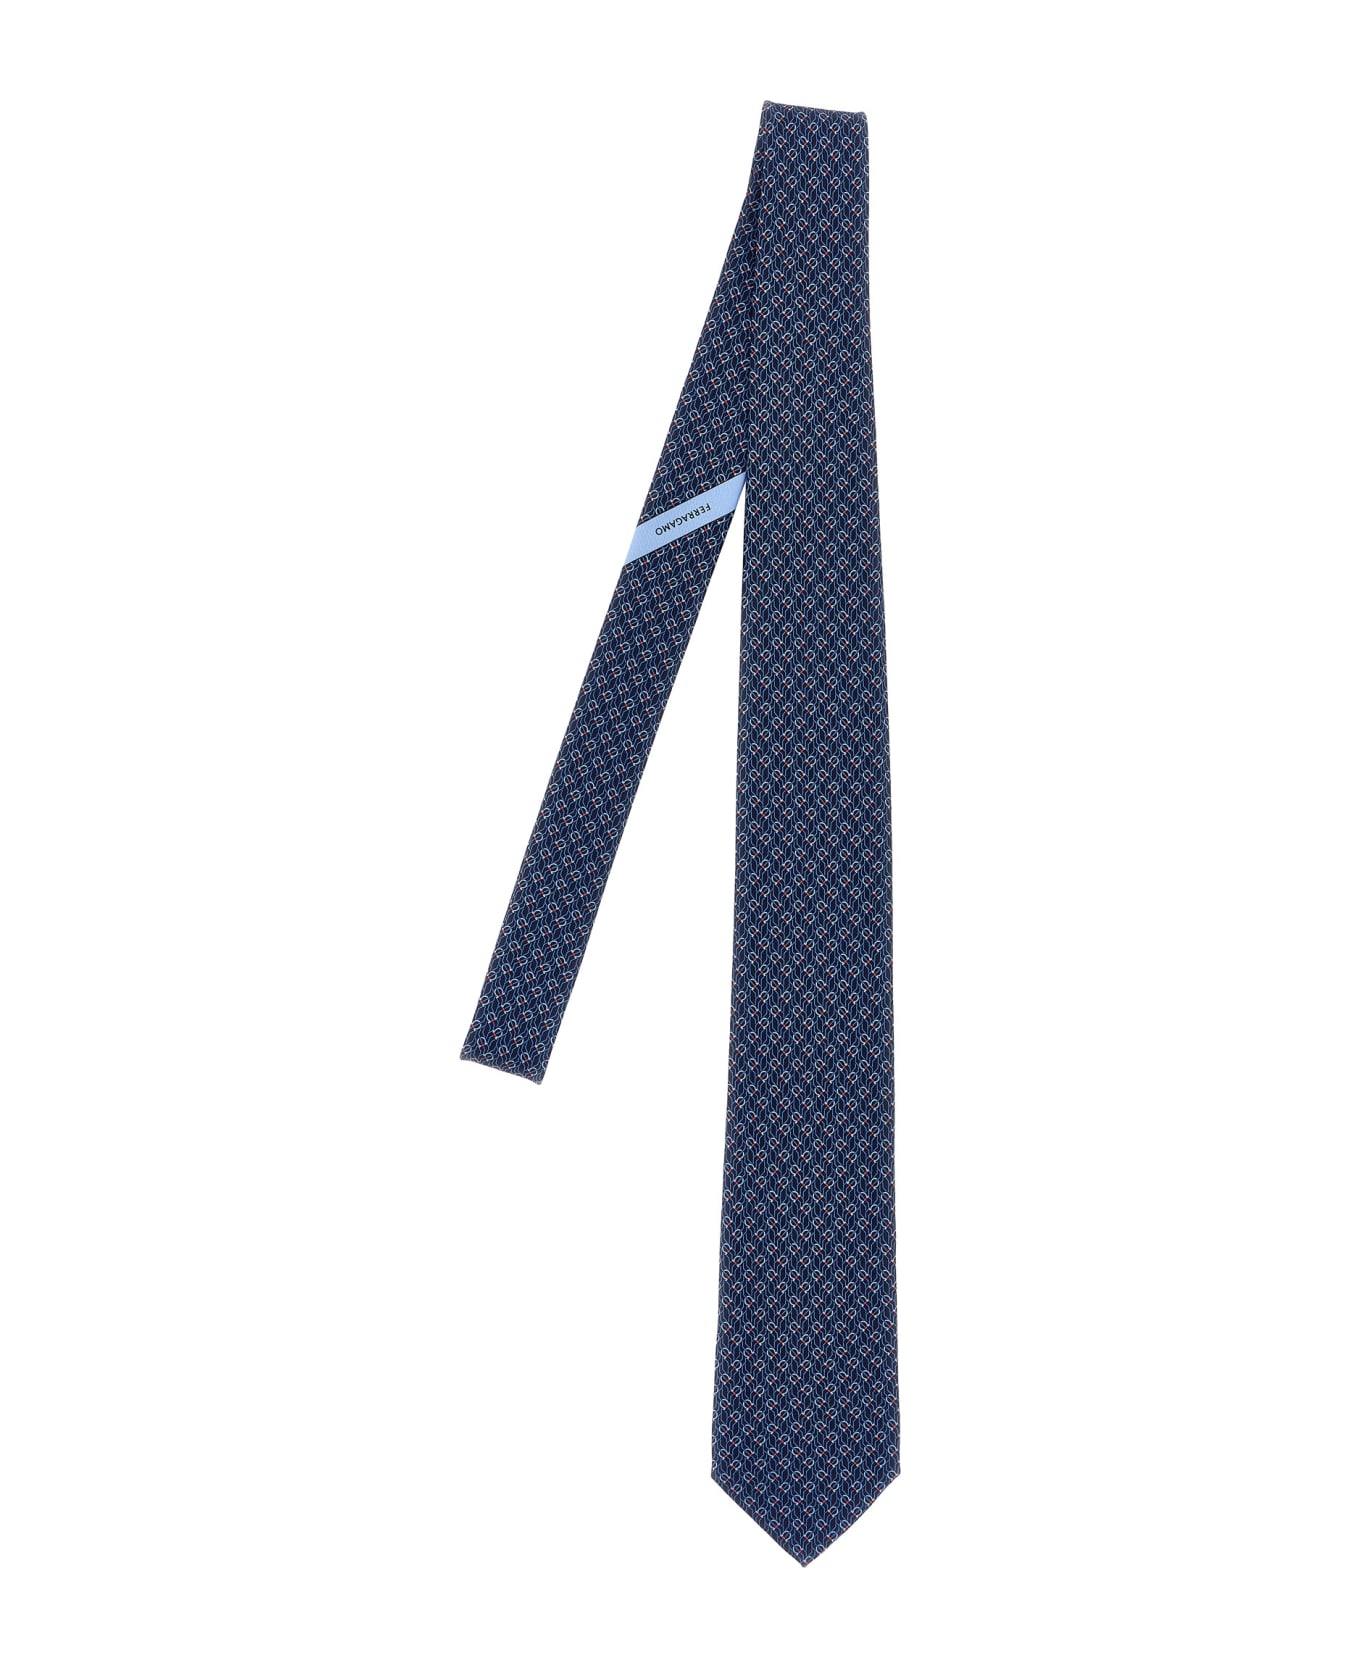 Ferragamo 'tetris' Tie - Blue ネクタイ